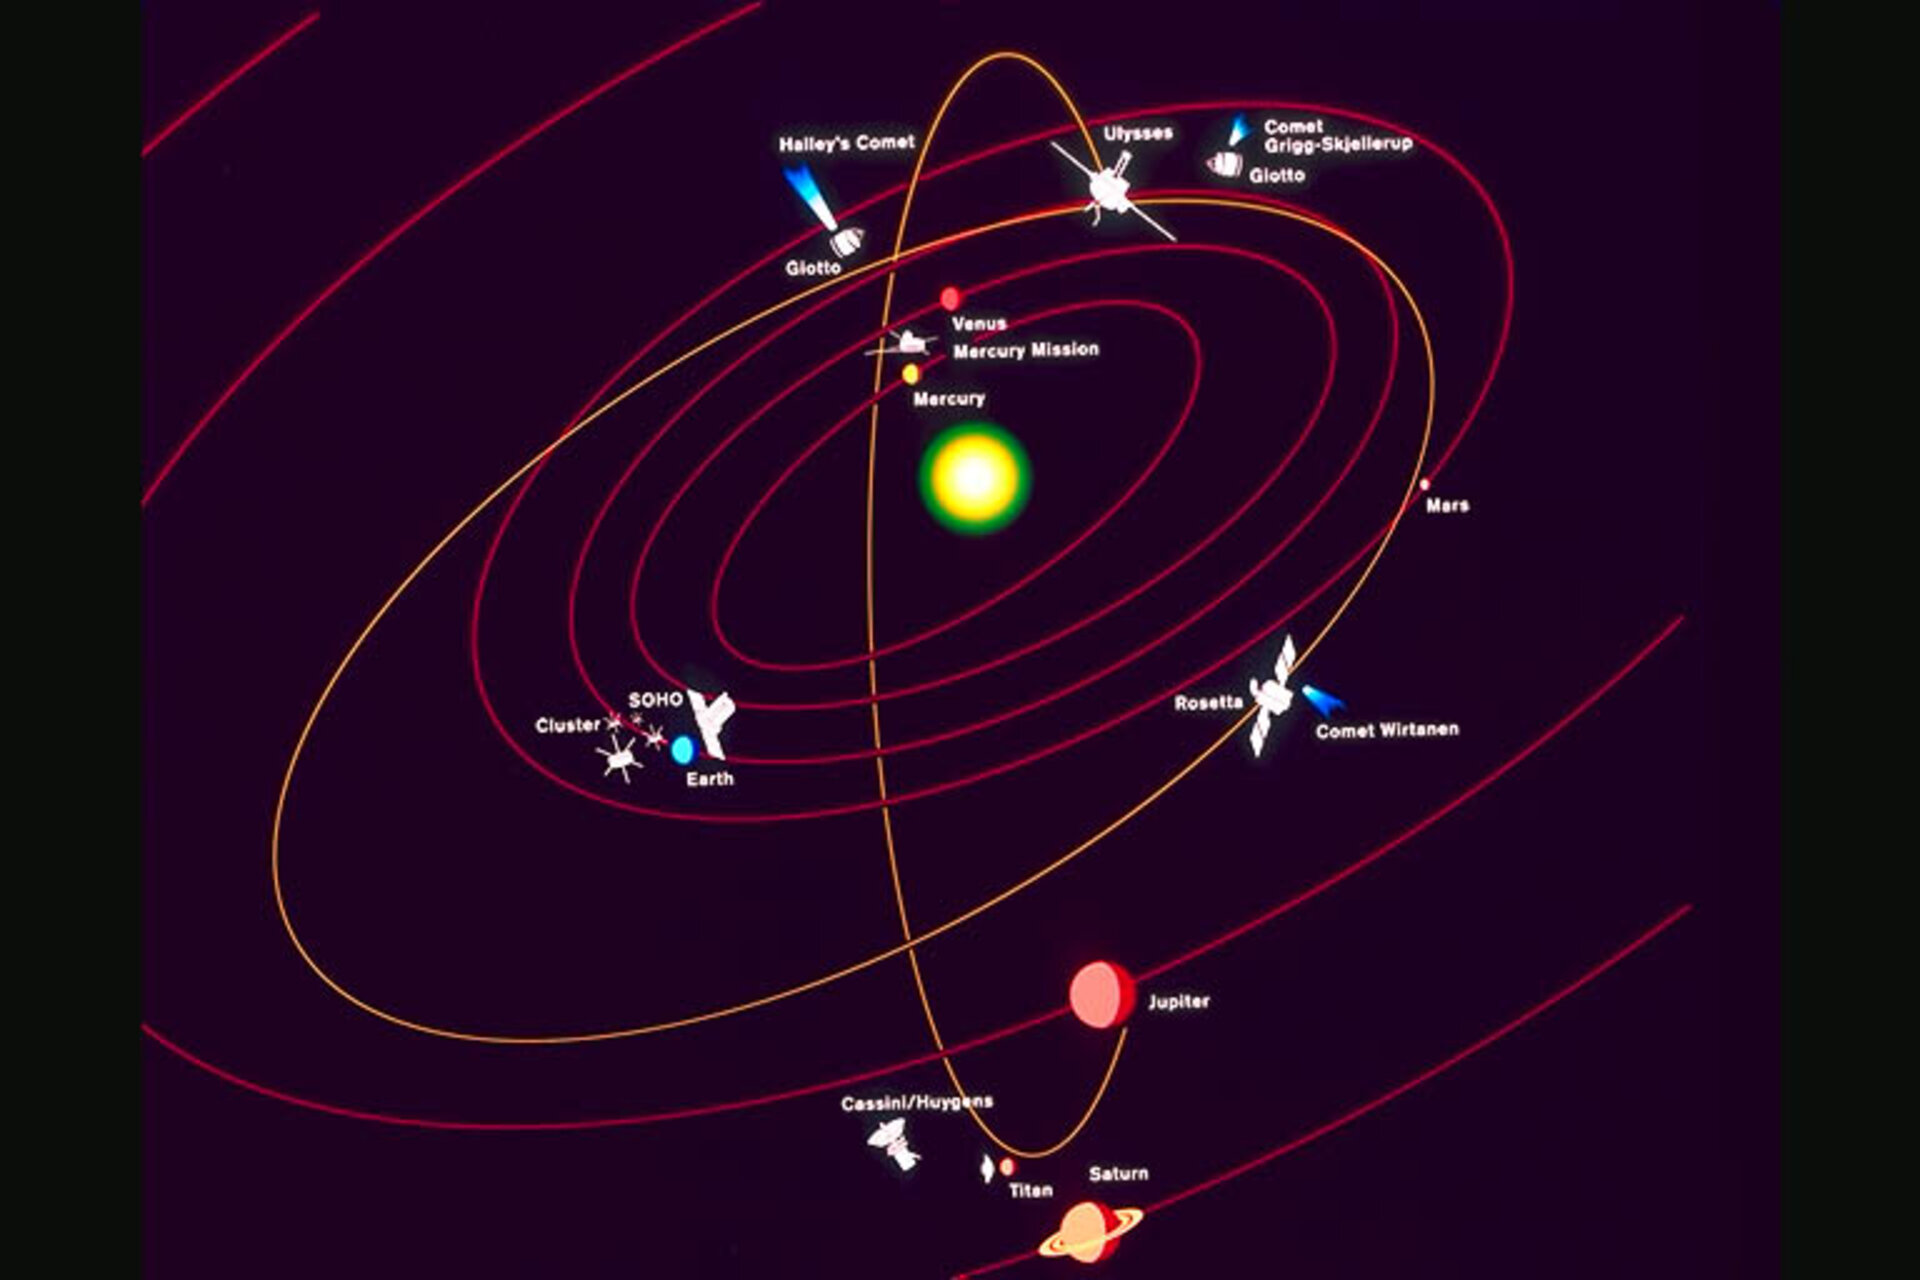 ESA's solar system missions